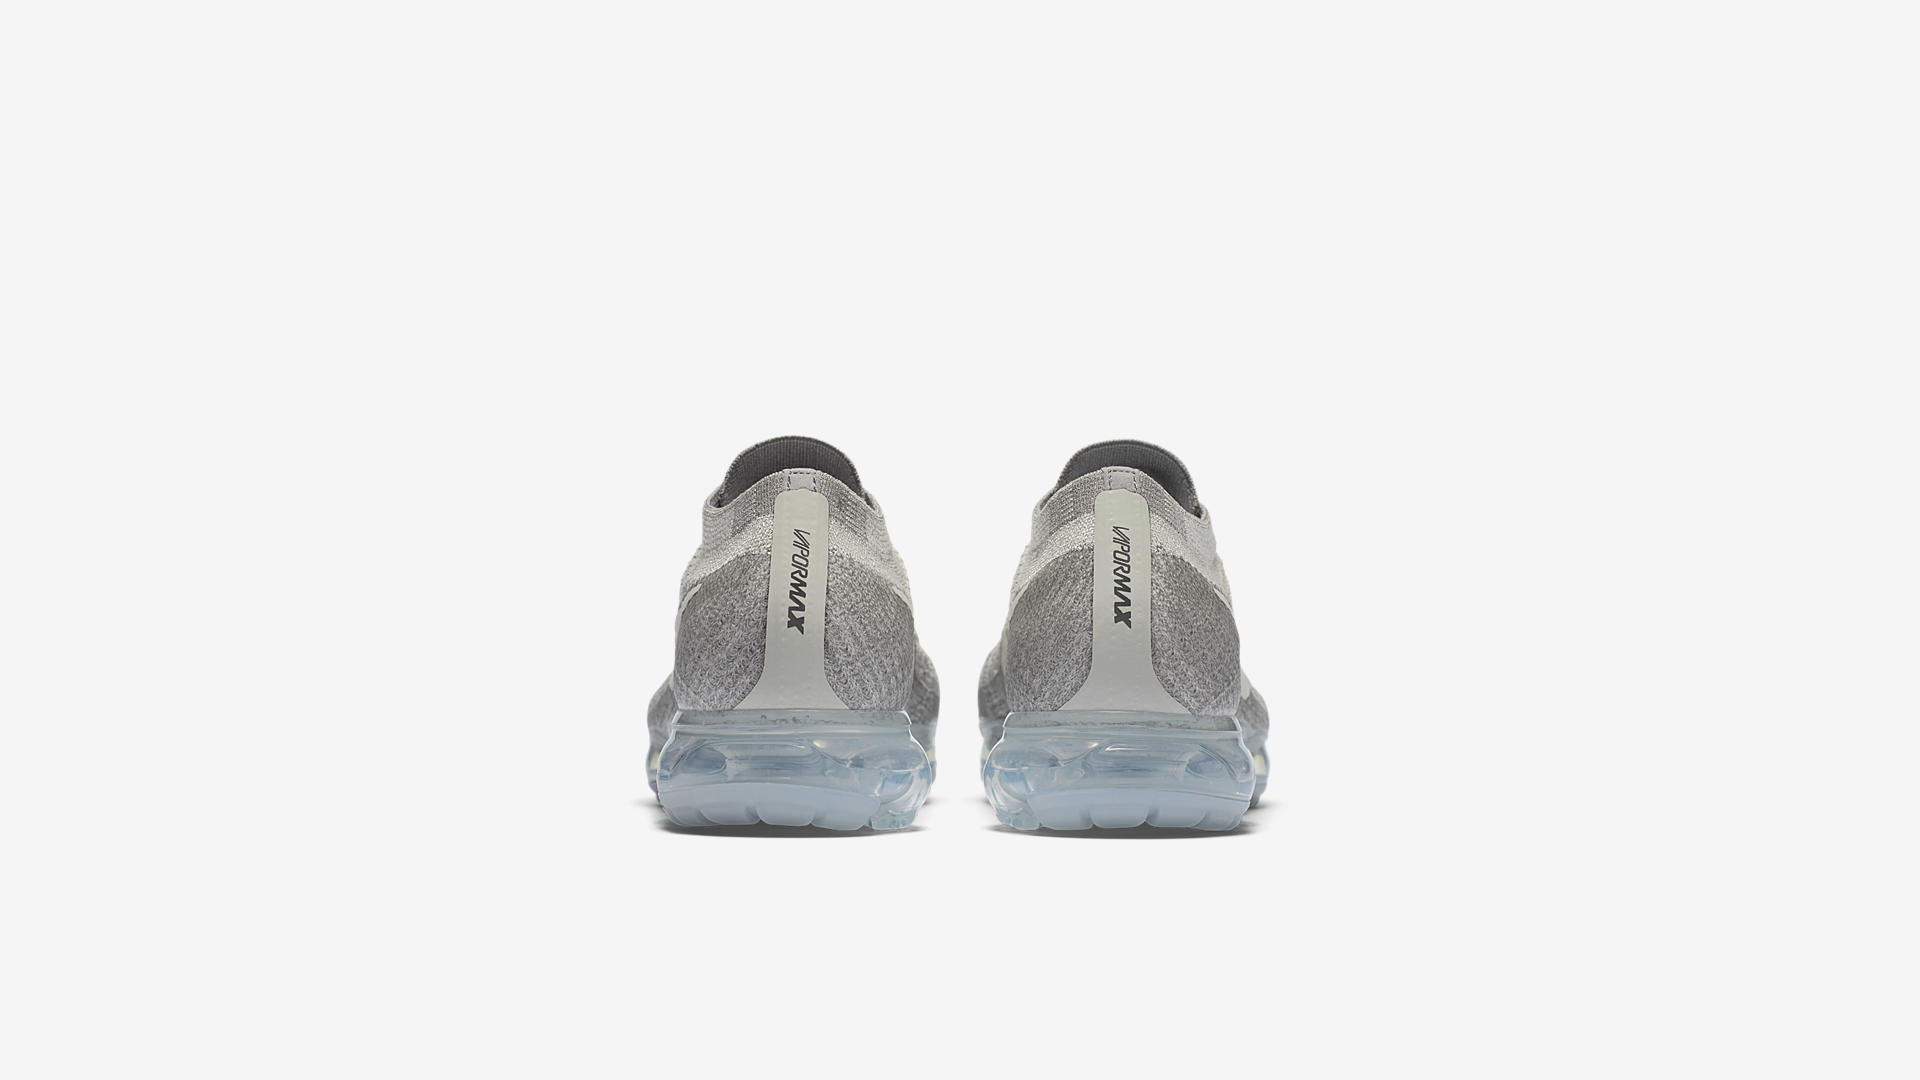 Nike Air Vapormax Pale Grey 849558 005 2